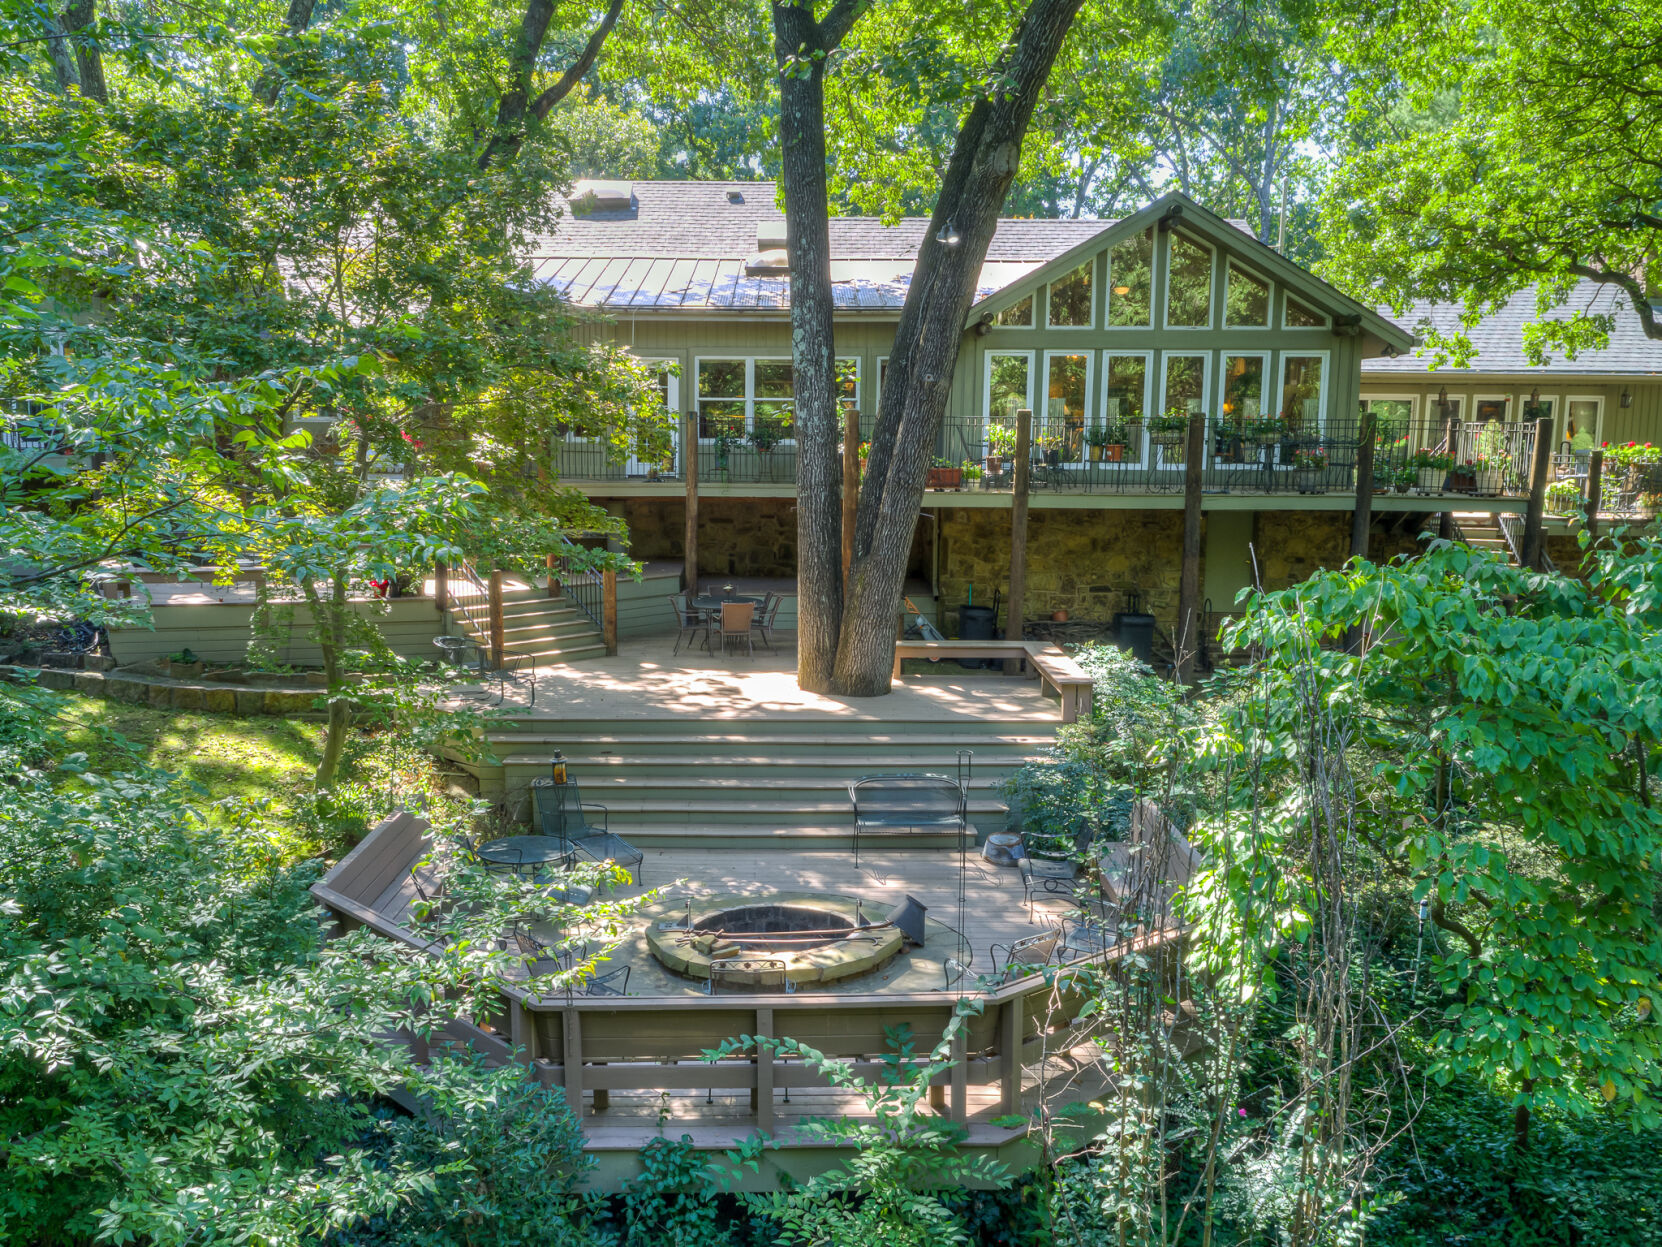 Backyard oasis South Tulsa home boasts beautiful yard for entertaining